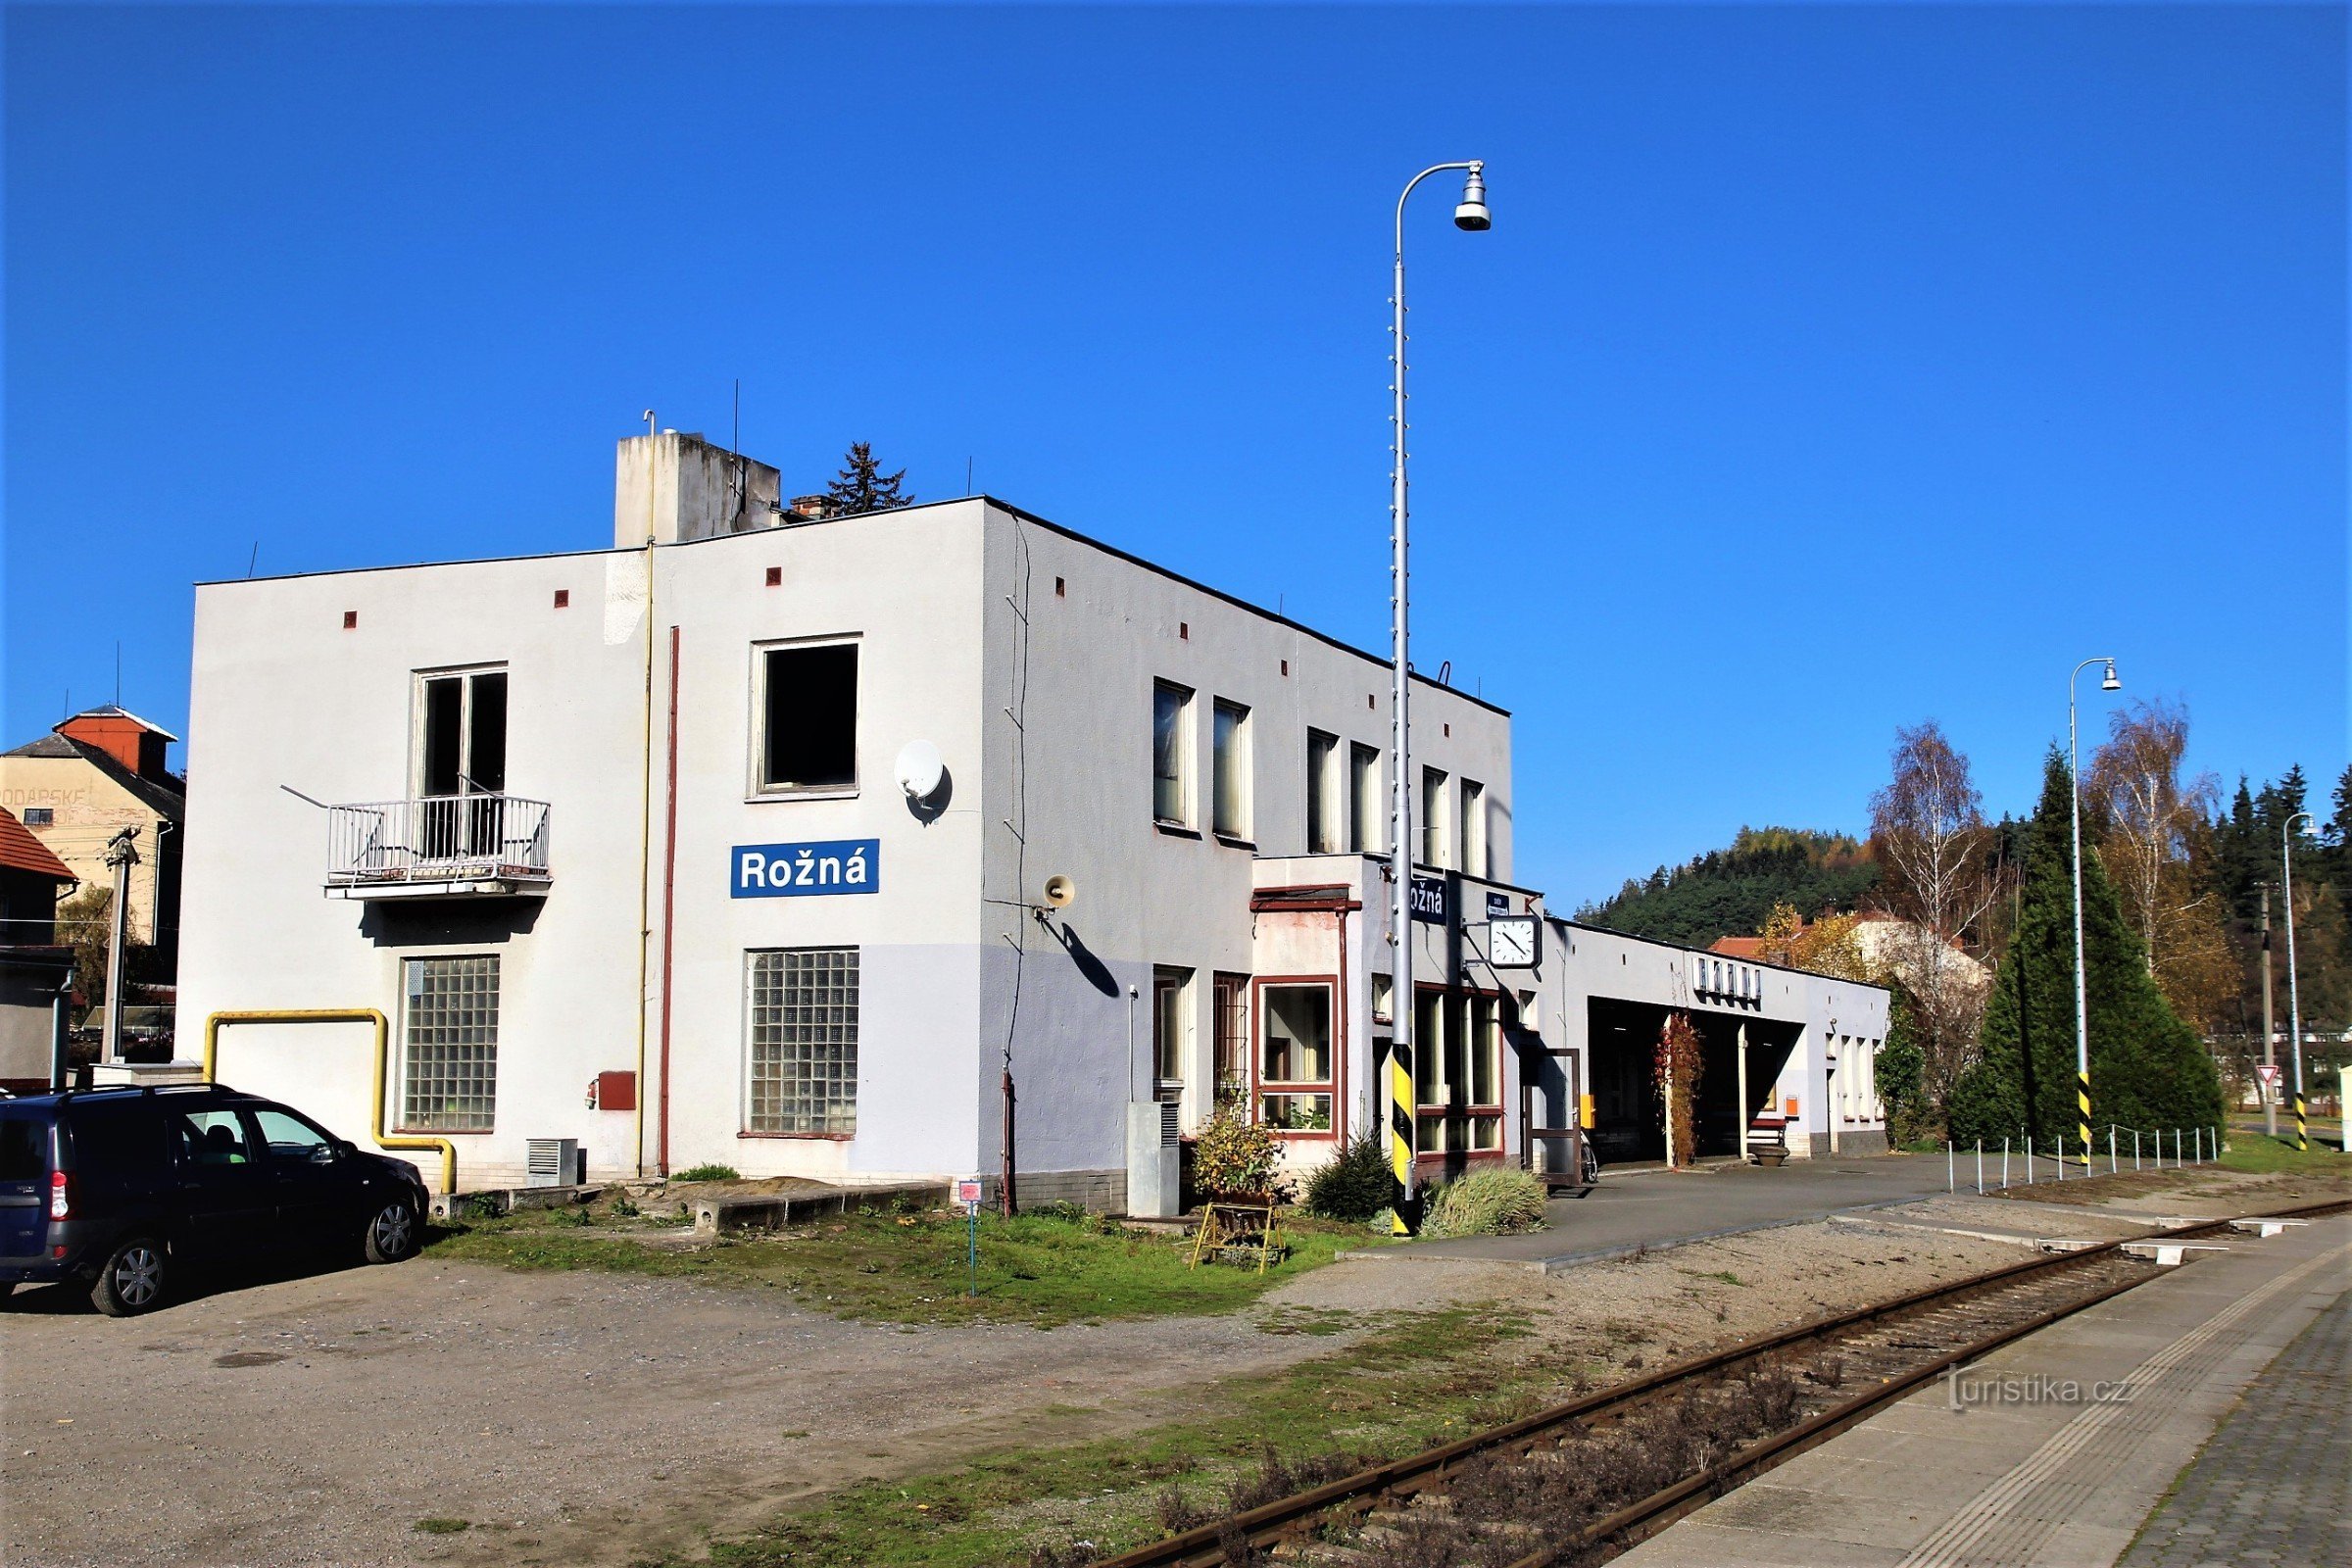 Rožná - bâtiment de la gare